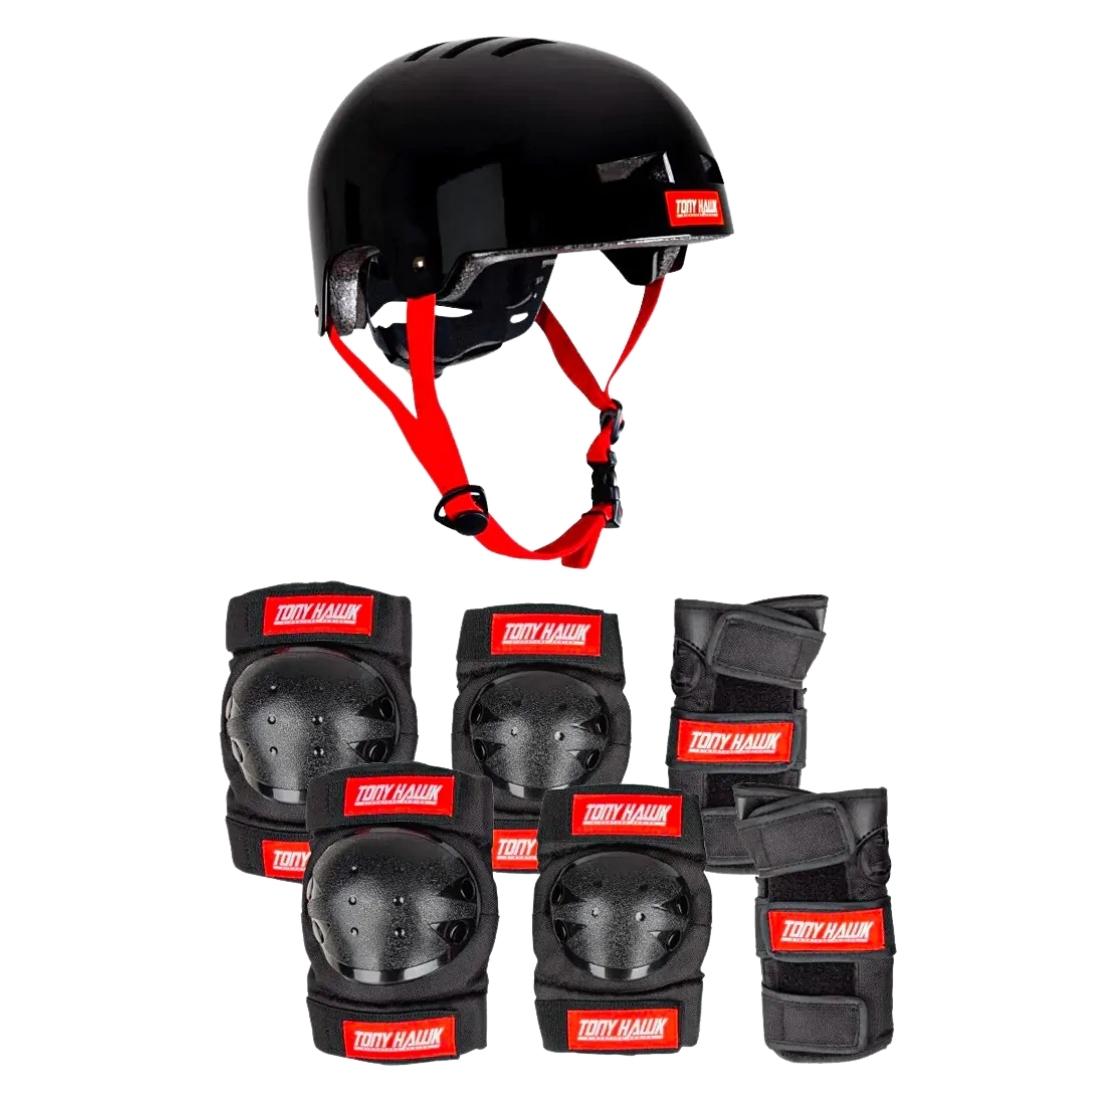 Birdhouse Tony Hawk Helmet And Pad Protective Set - Black - Skateboard Pad Sets by Birdhouse